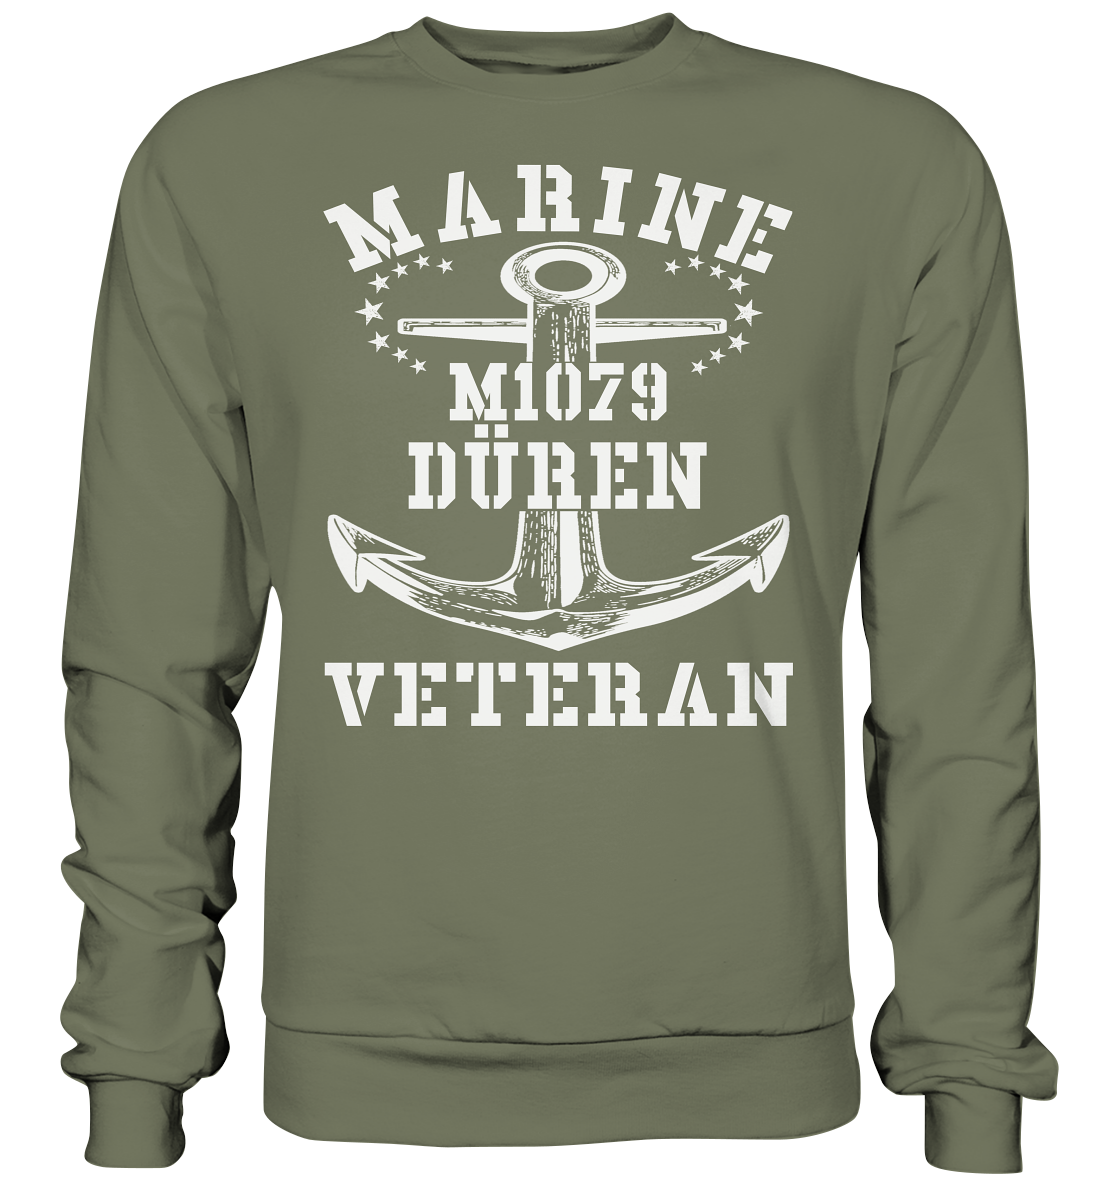 MARINE VETERAN M1079 DÜREN - Premium Sweatshirt